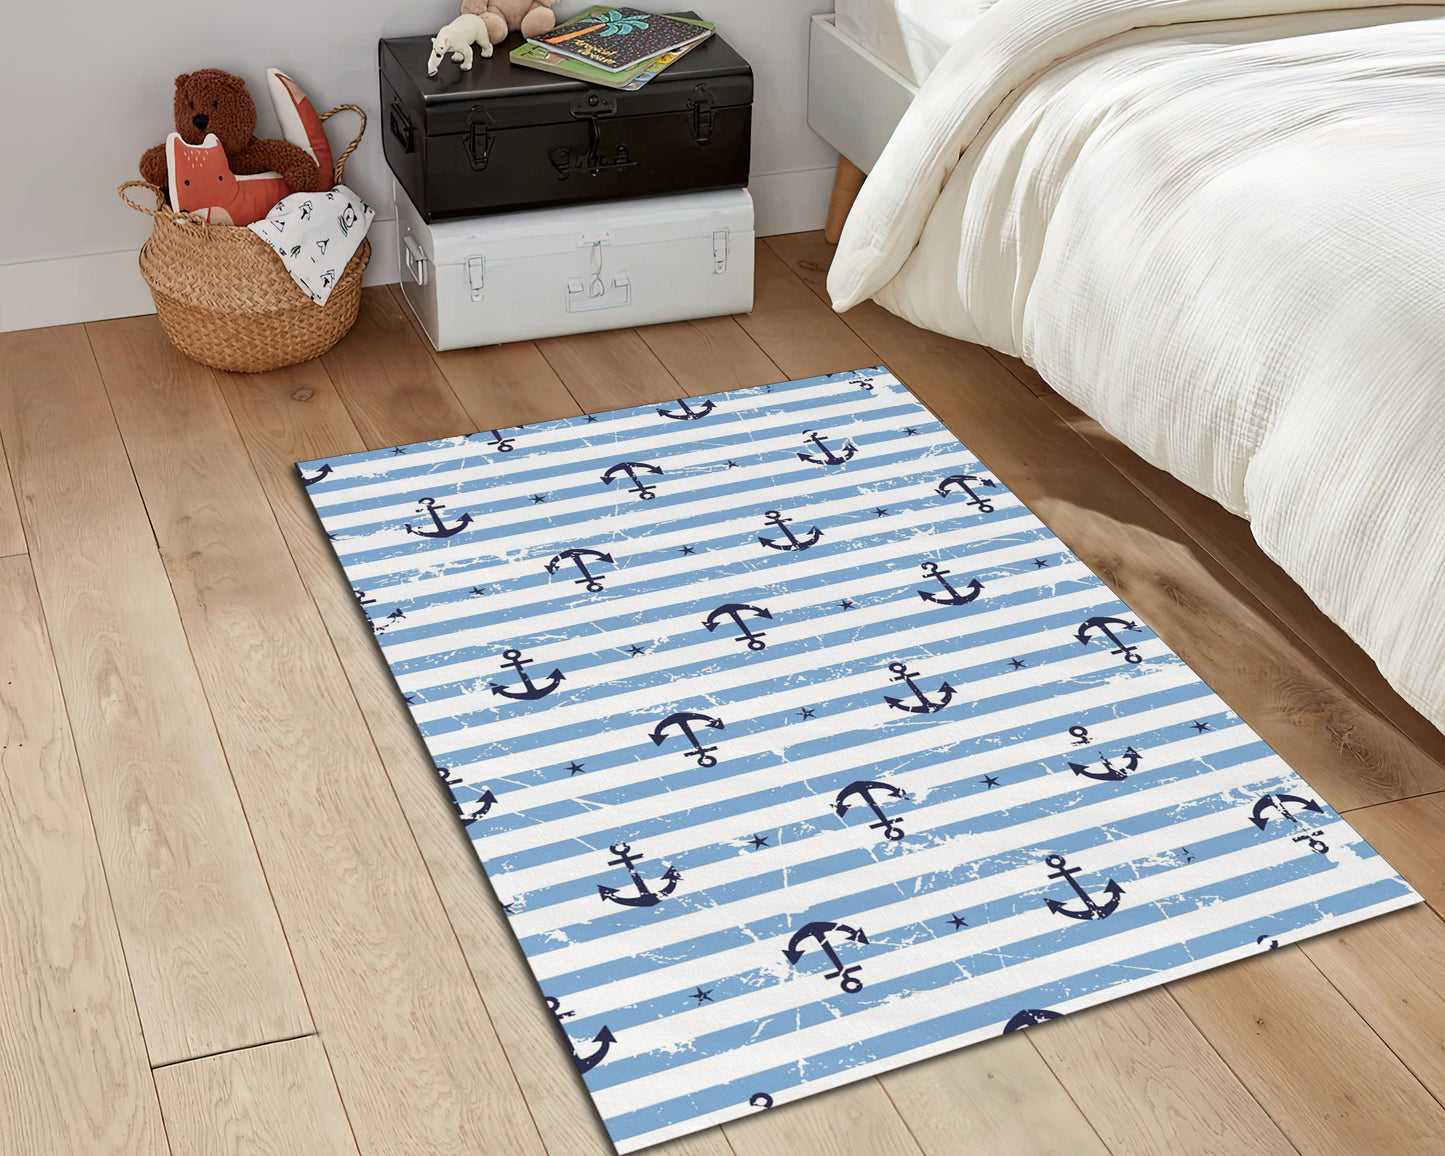 Sea Anchor Rug, Boys Room Rug, Striped Pattern Carpet, Nursery Play Room Mat, Baby Gift